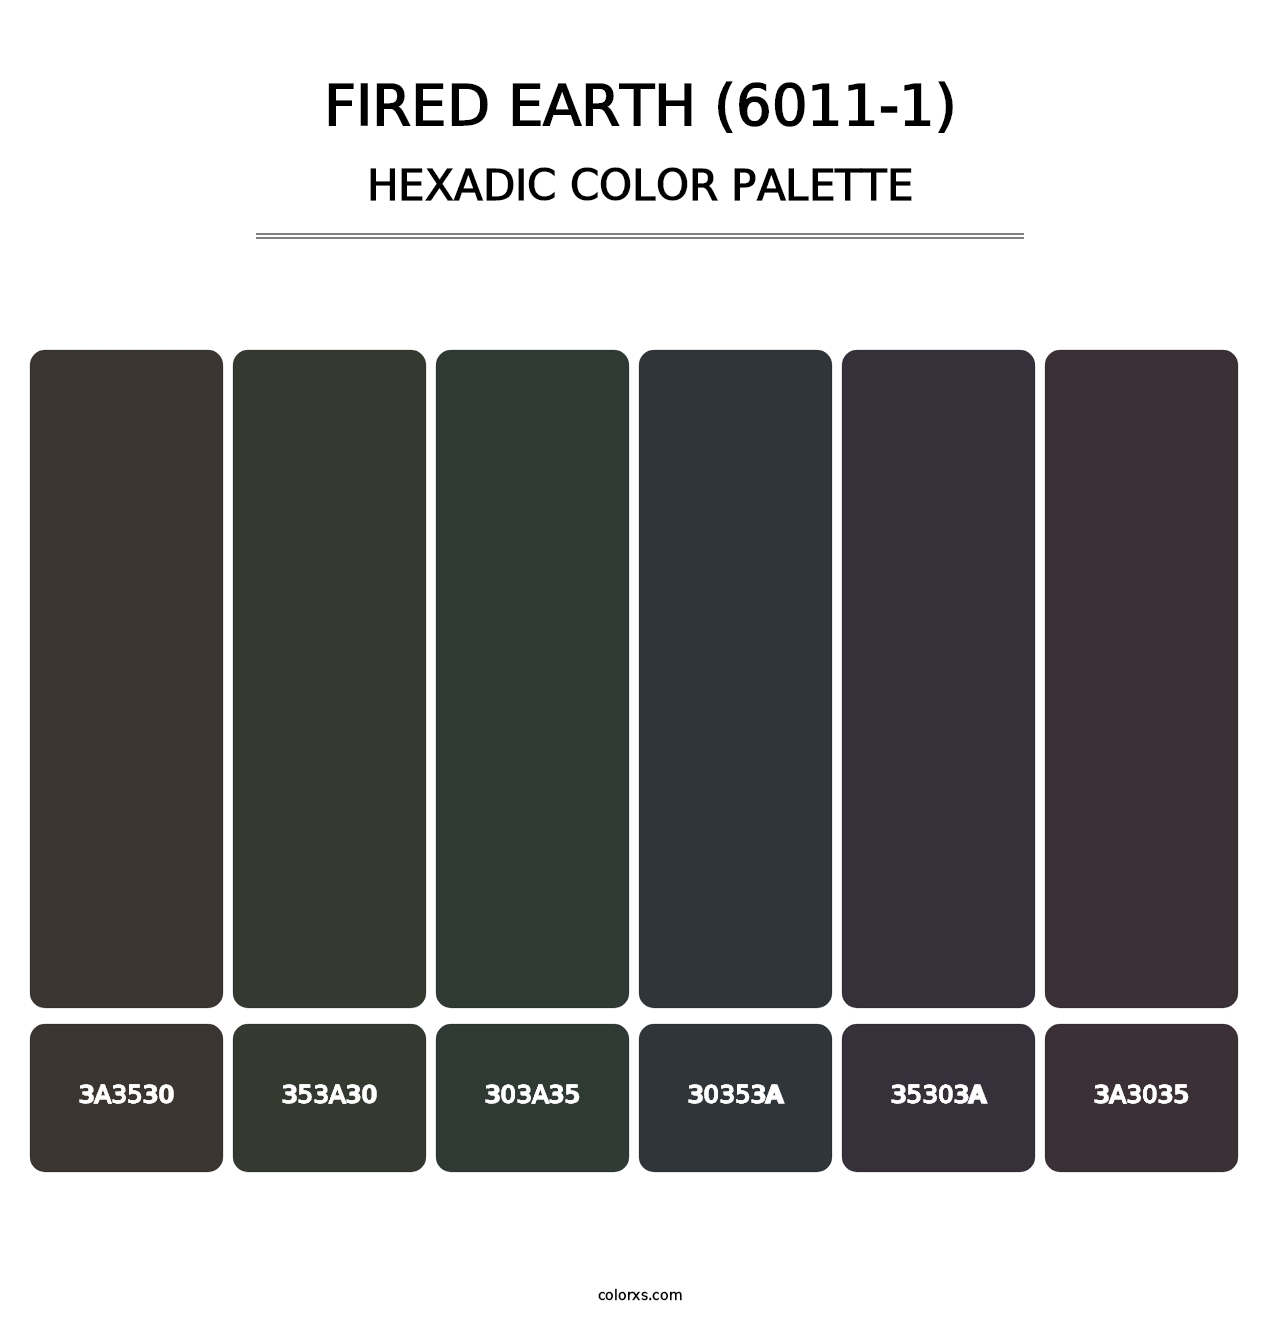 Fired Earth (6011-1) - Hexadic Color Palette